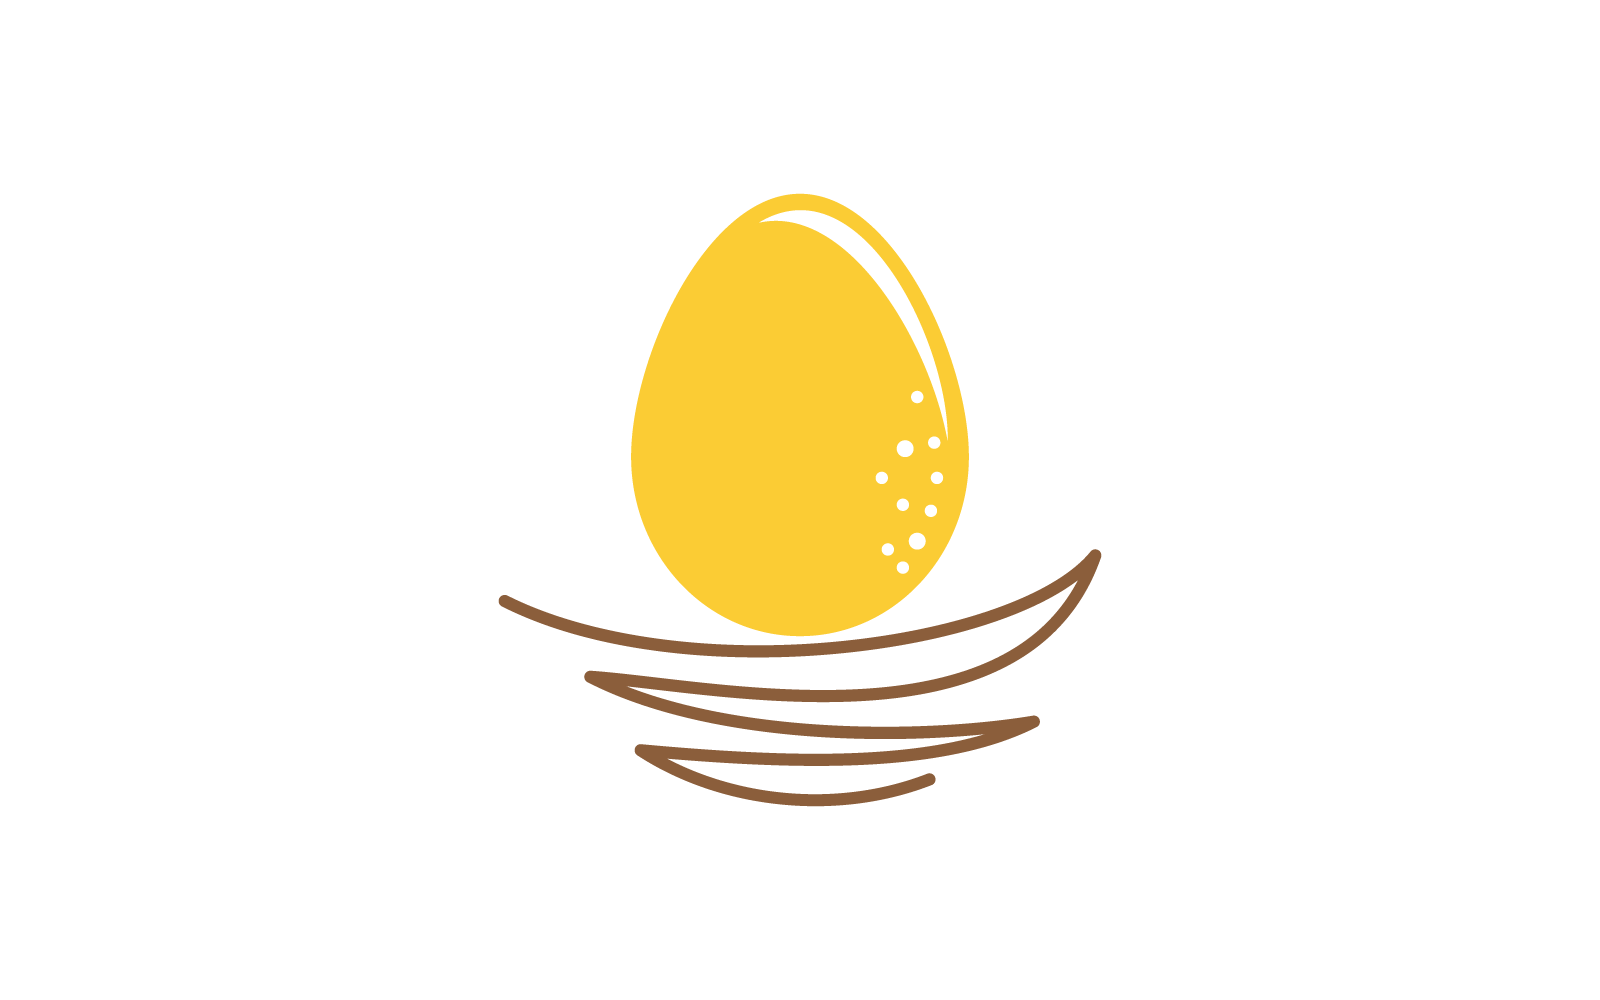 Jajko ilustracja logo wektor Płaska konstrukcja